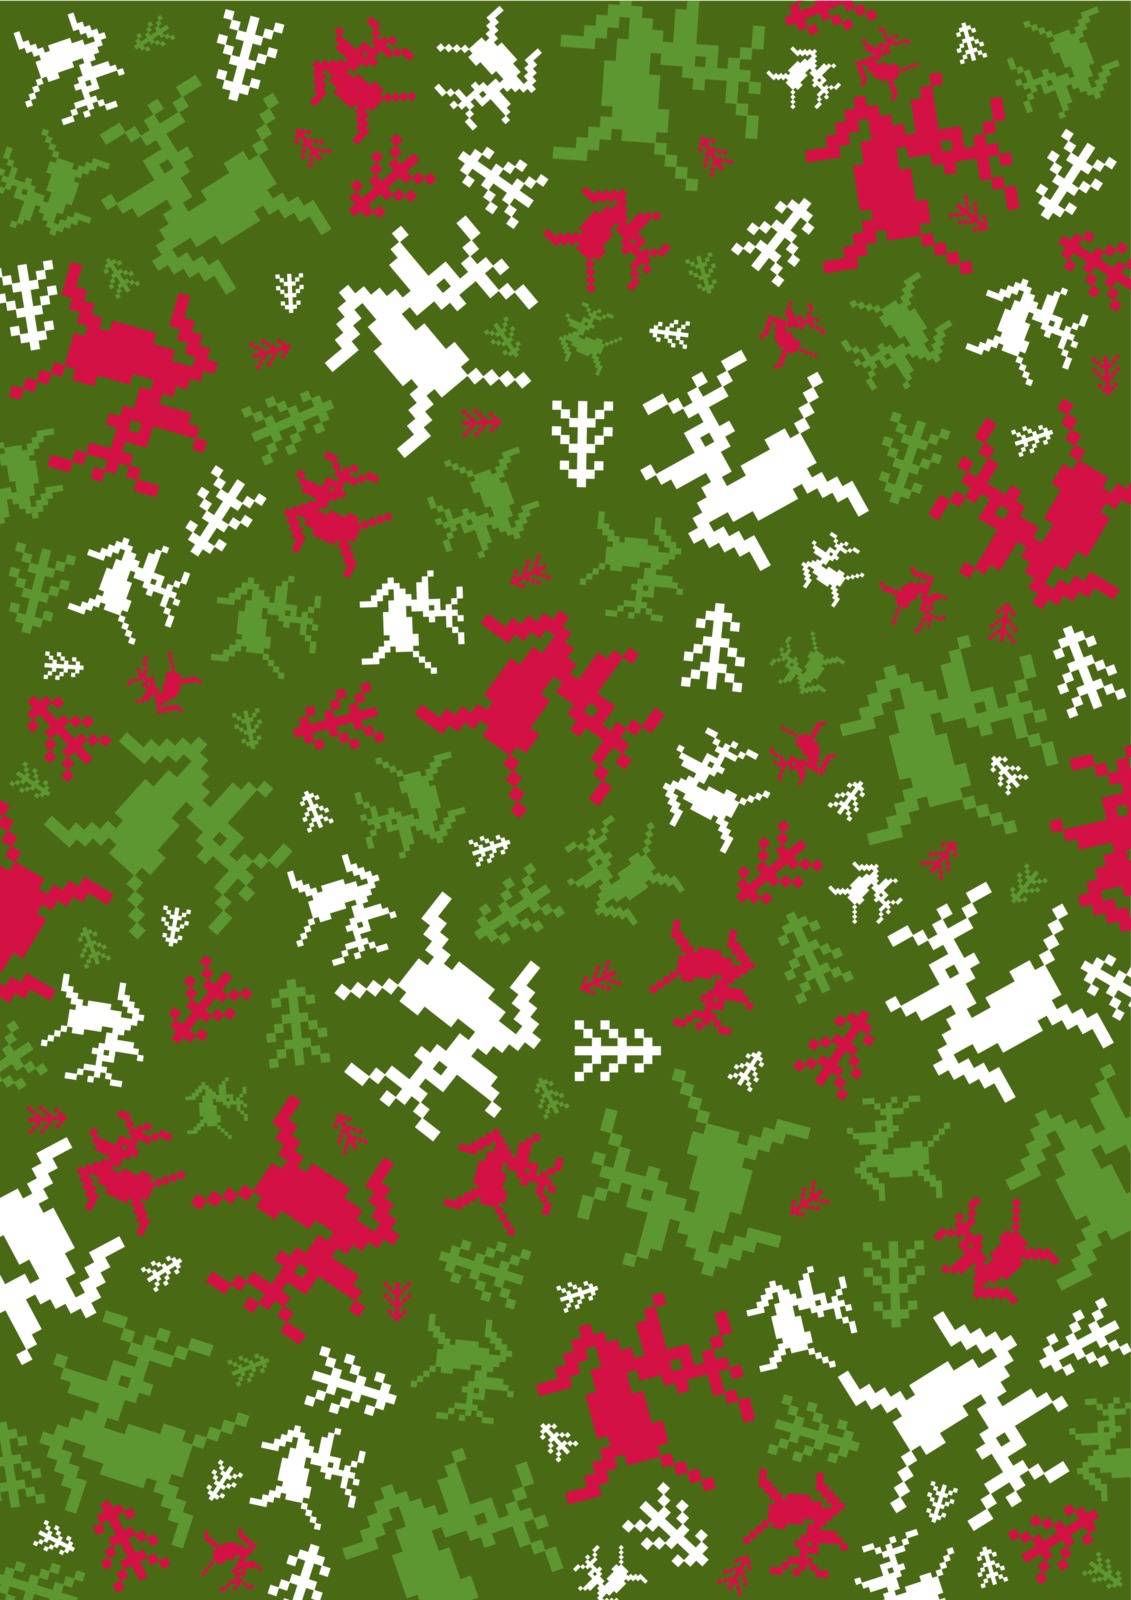 Simple Reindeer in Silhouette Christmas Pattern by Mark Murphy Creative